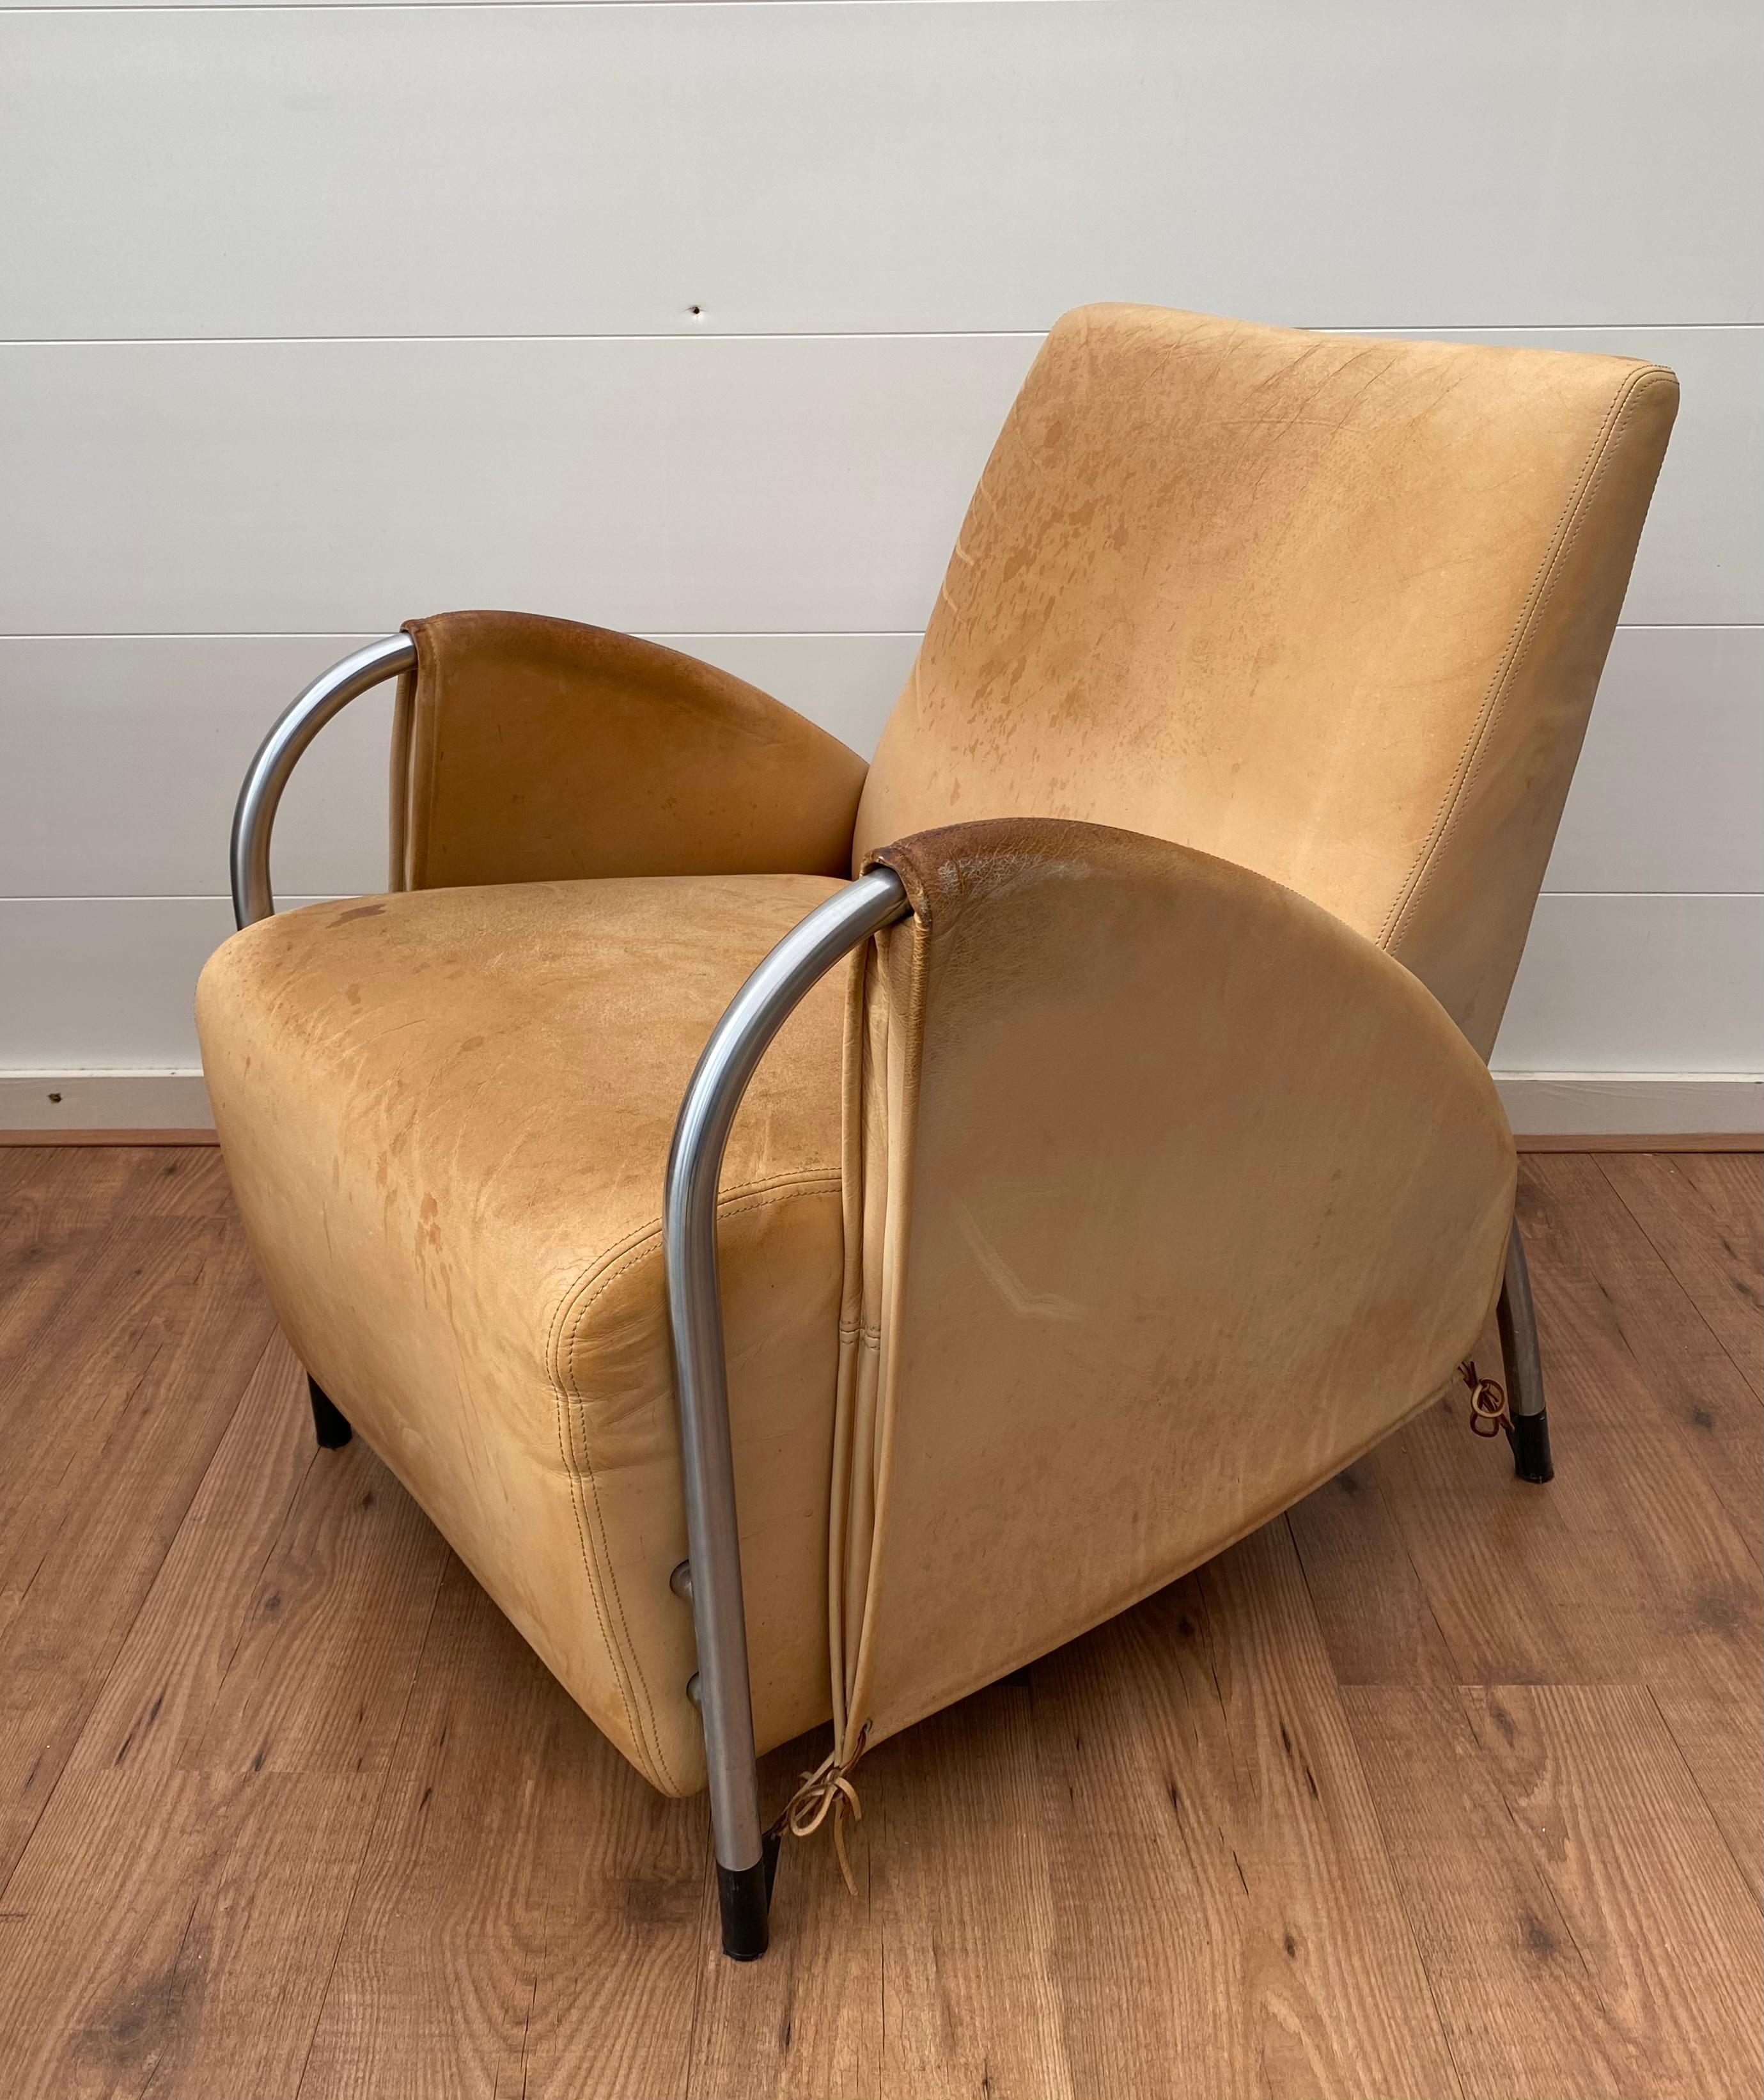 Art Deco, Machine Age Style Armchairs by Jan des Bouvrie for Gelderland In Distressed Condition For Sale In Schagen, NL